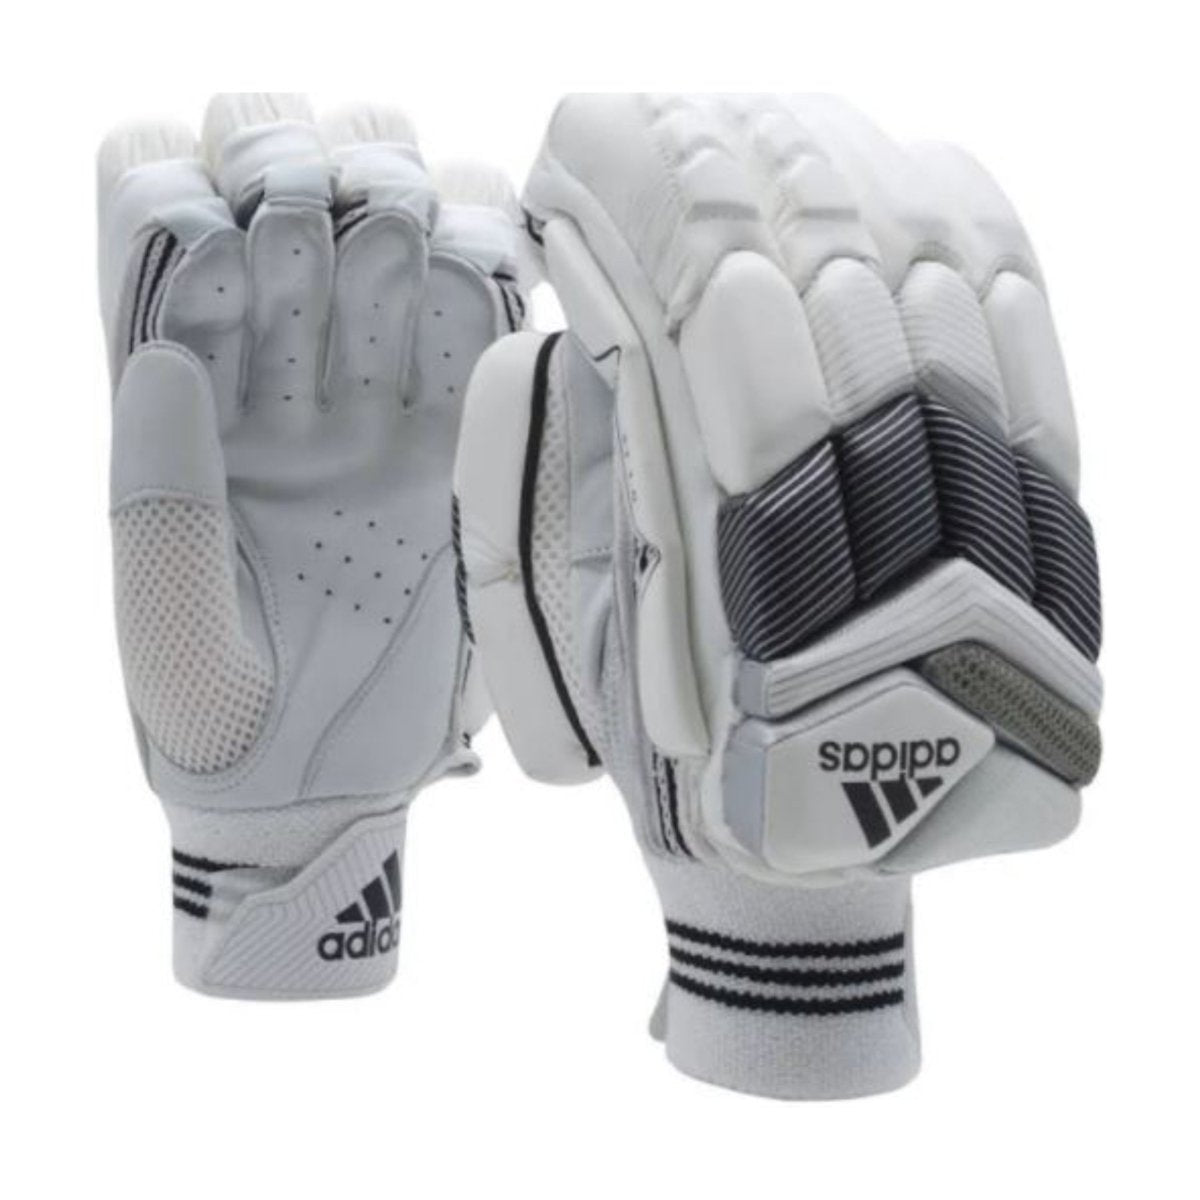 Adidas XT 1.0 Cricket Batting Gloves.